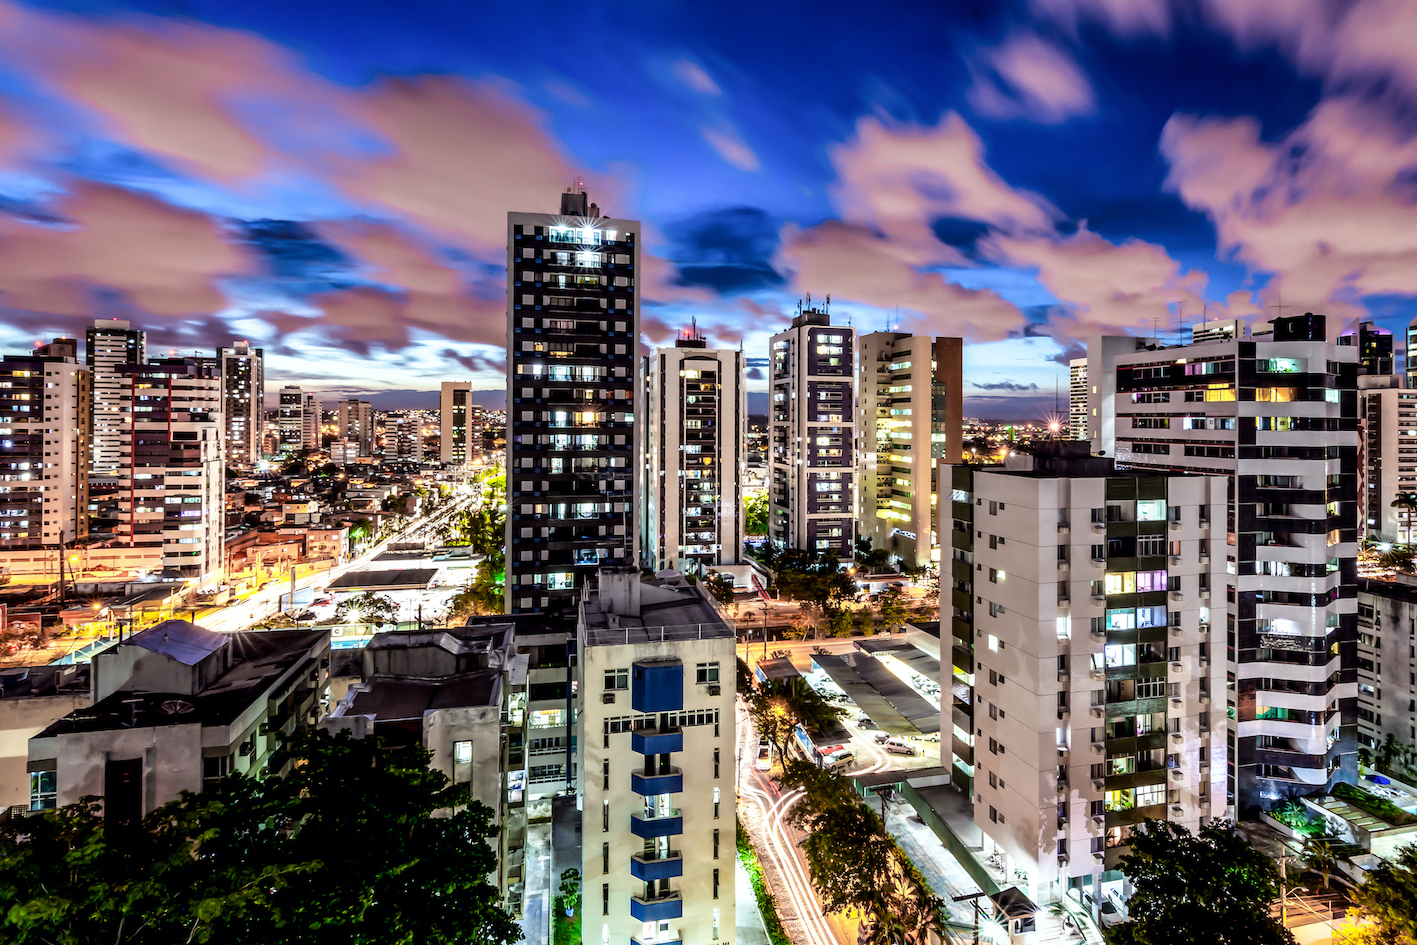 Boa Viagem, Recife, Pernambuco, Brazil. Nikon D7100, Tokina 11-20mm 2.8 lens.